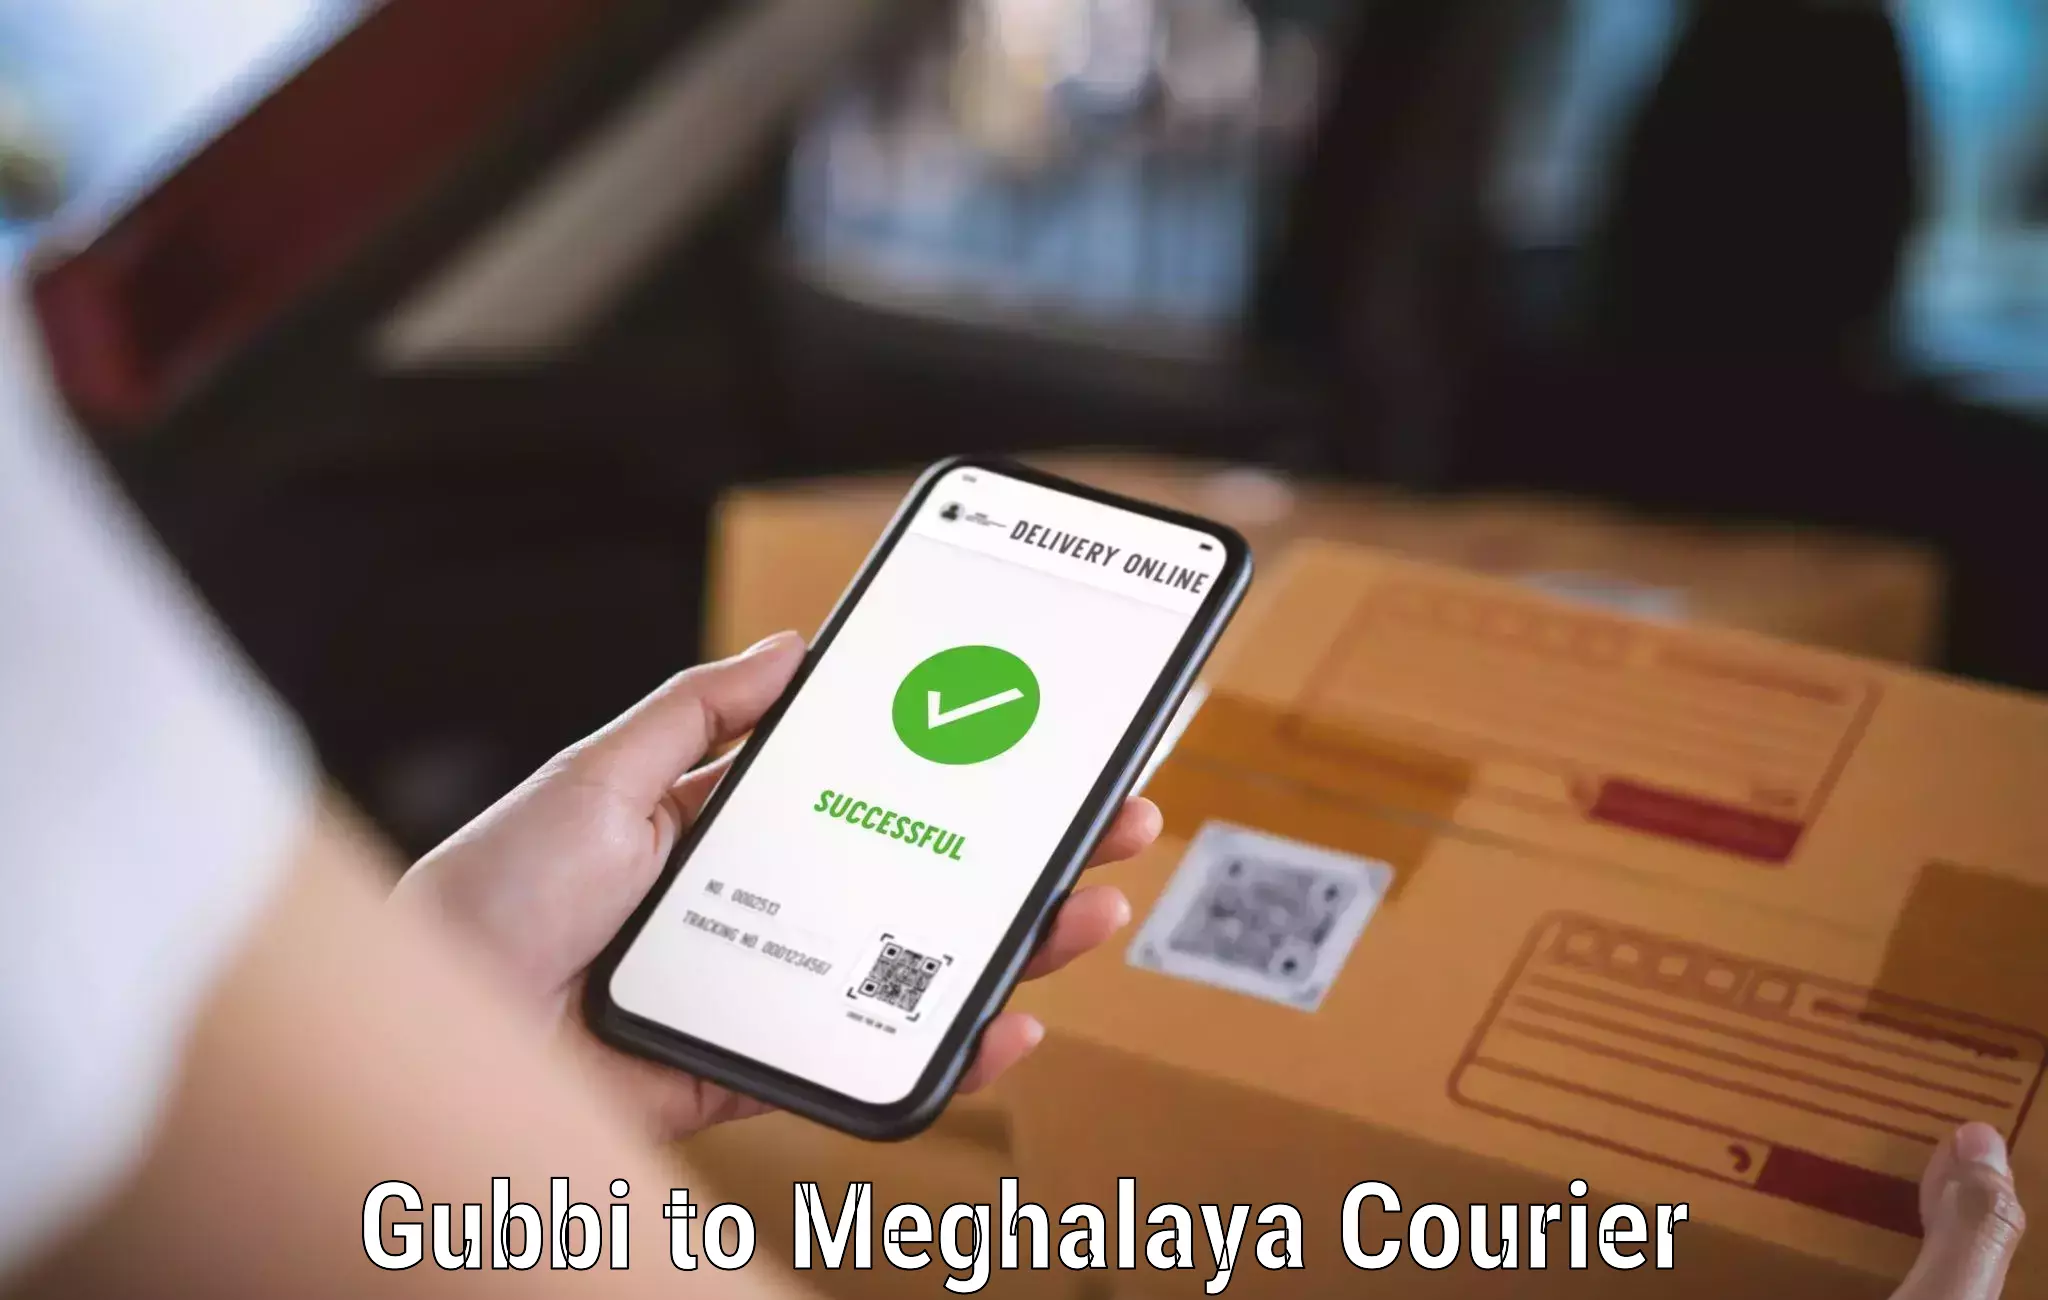 Courier service innovation in Gubbi to Meghalaya